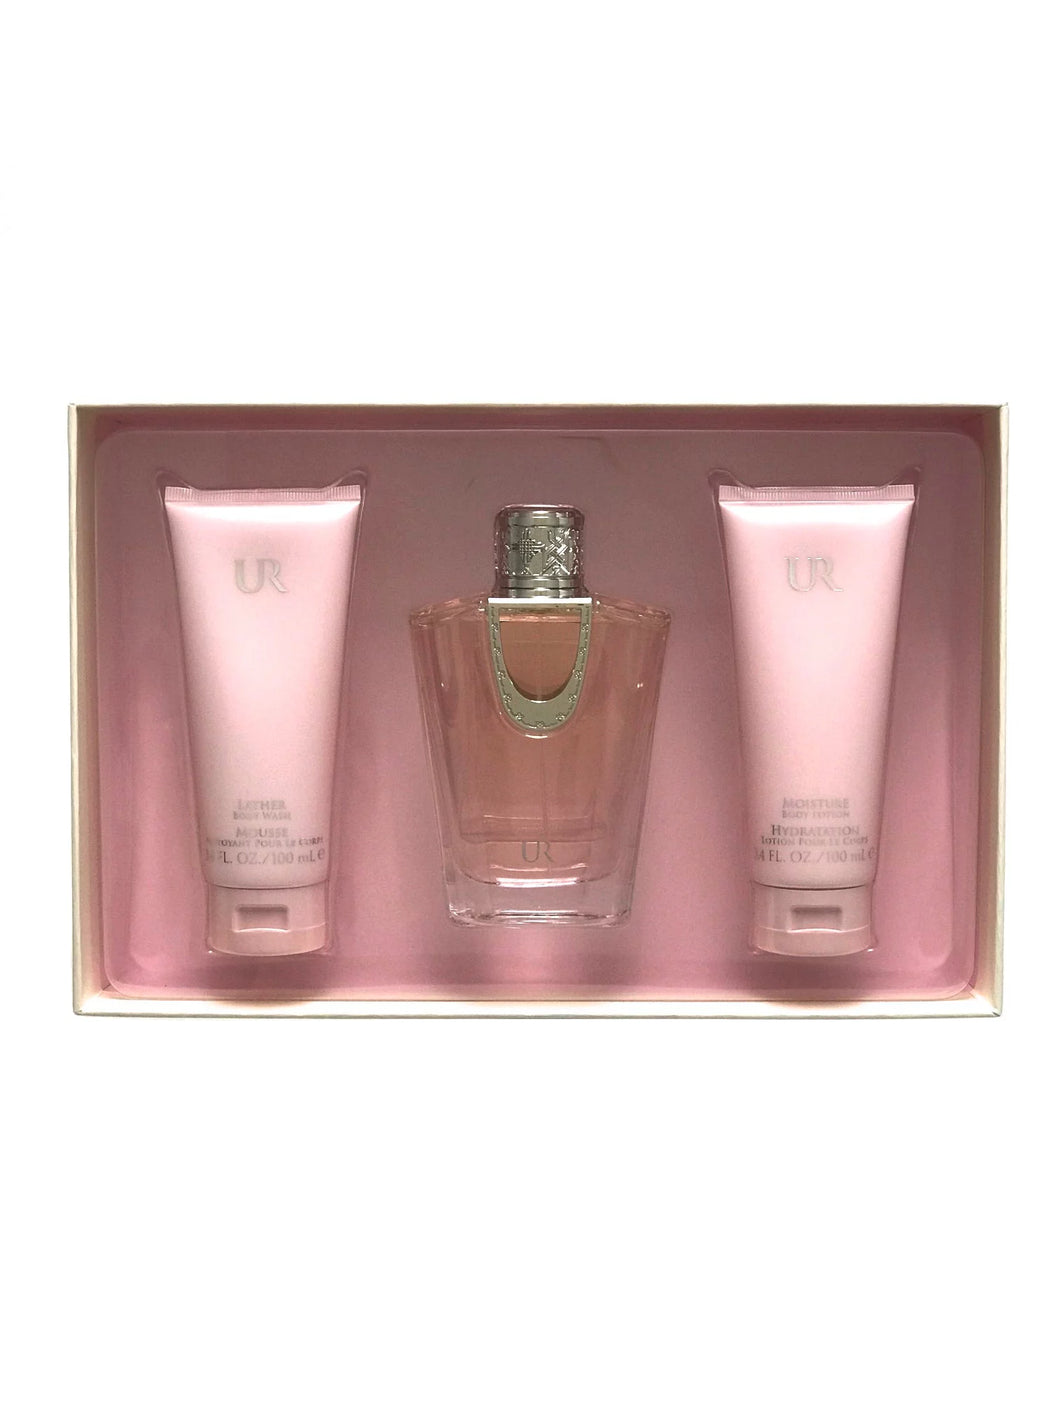 UR Women Gift Set by Usher Eau de Parfum